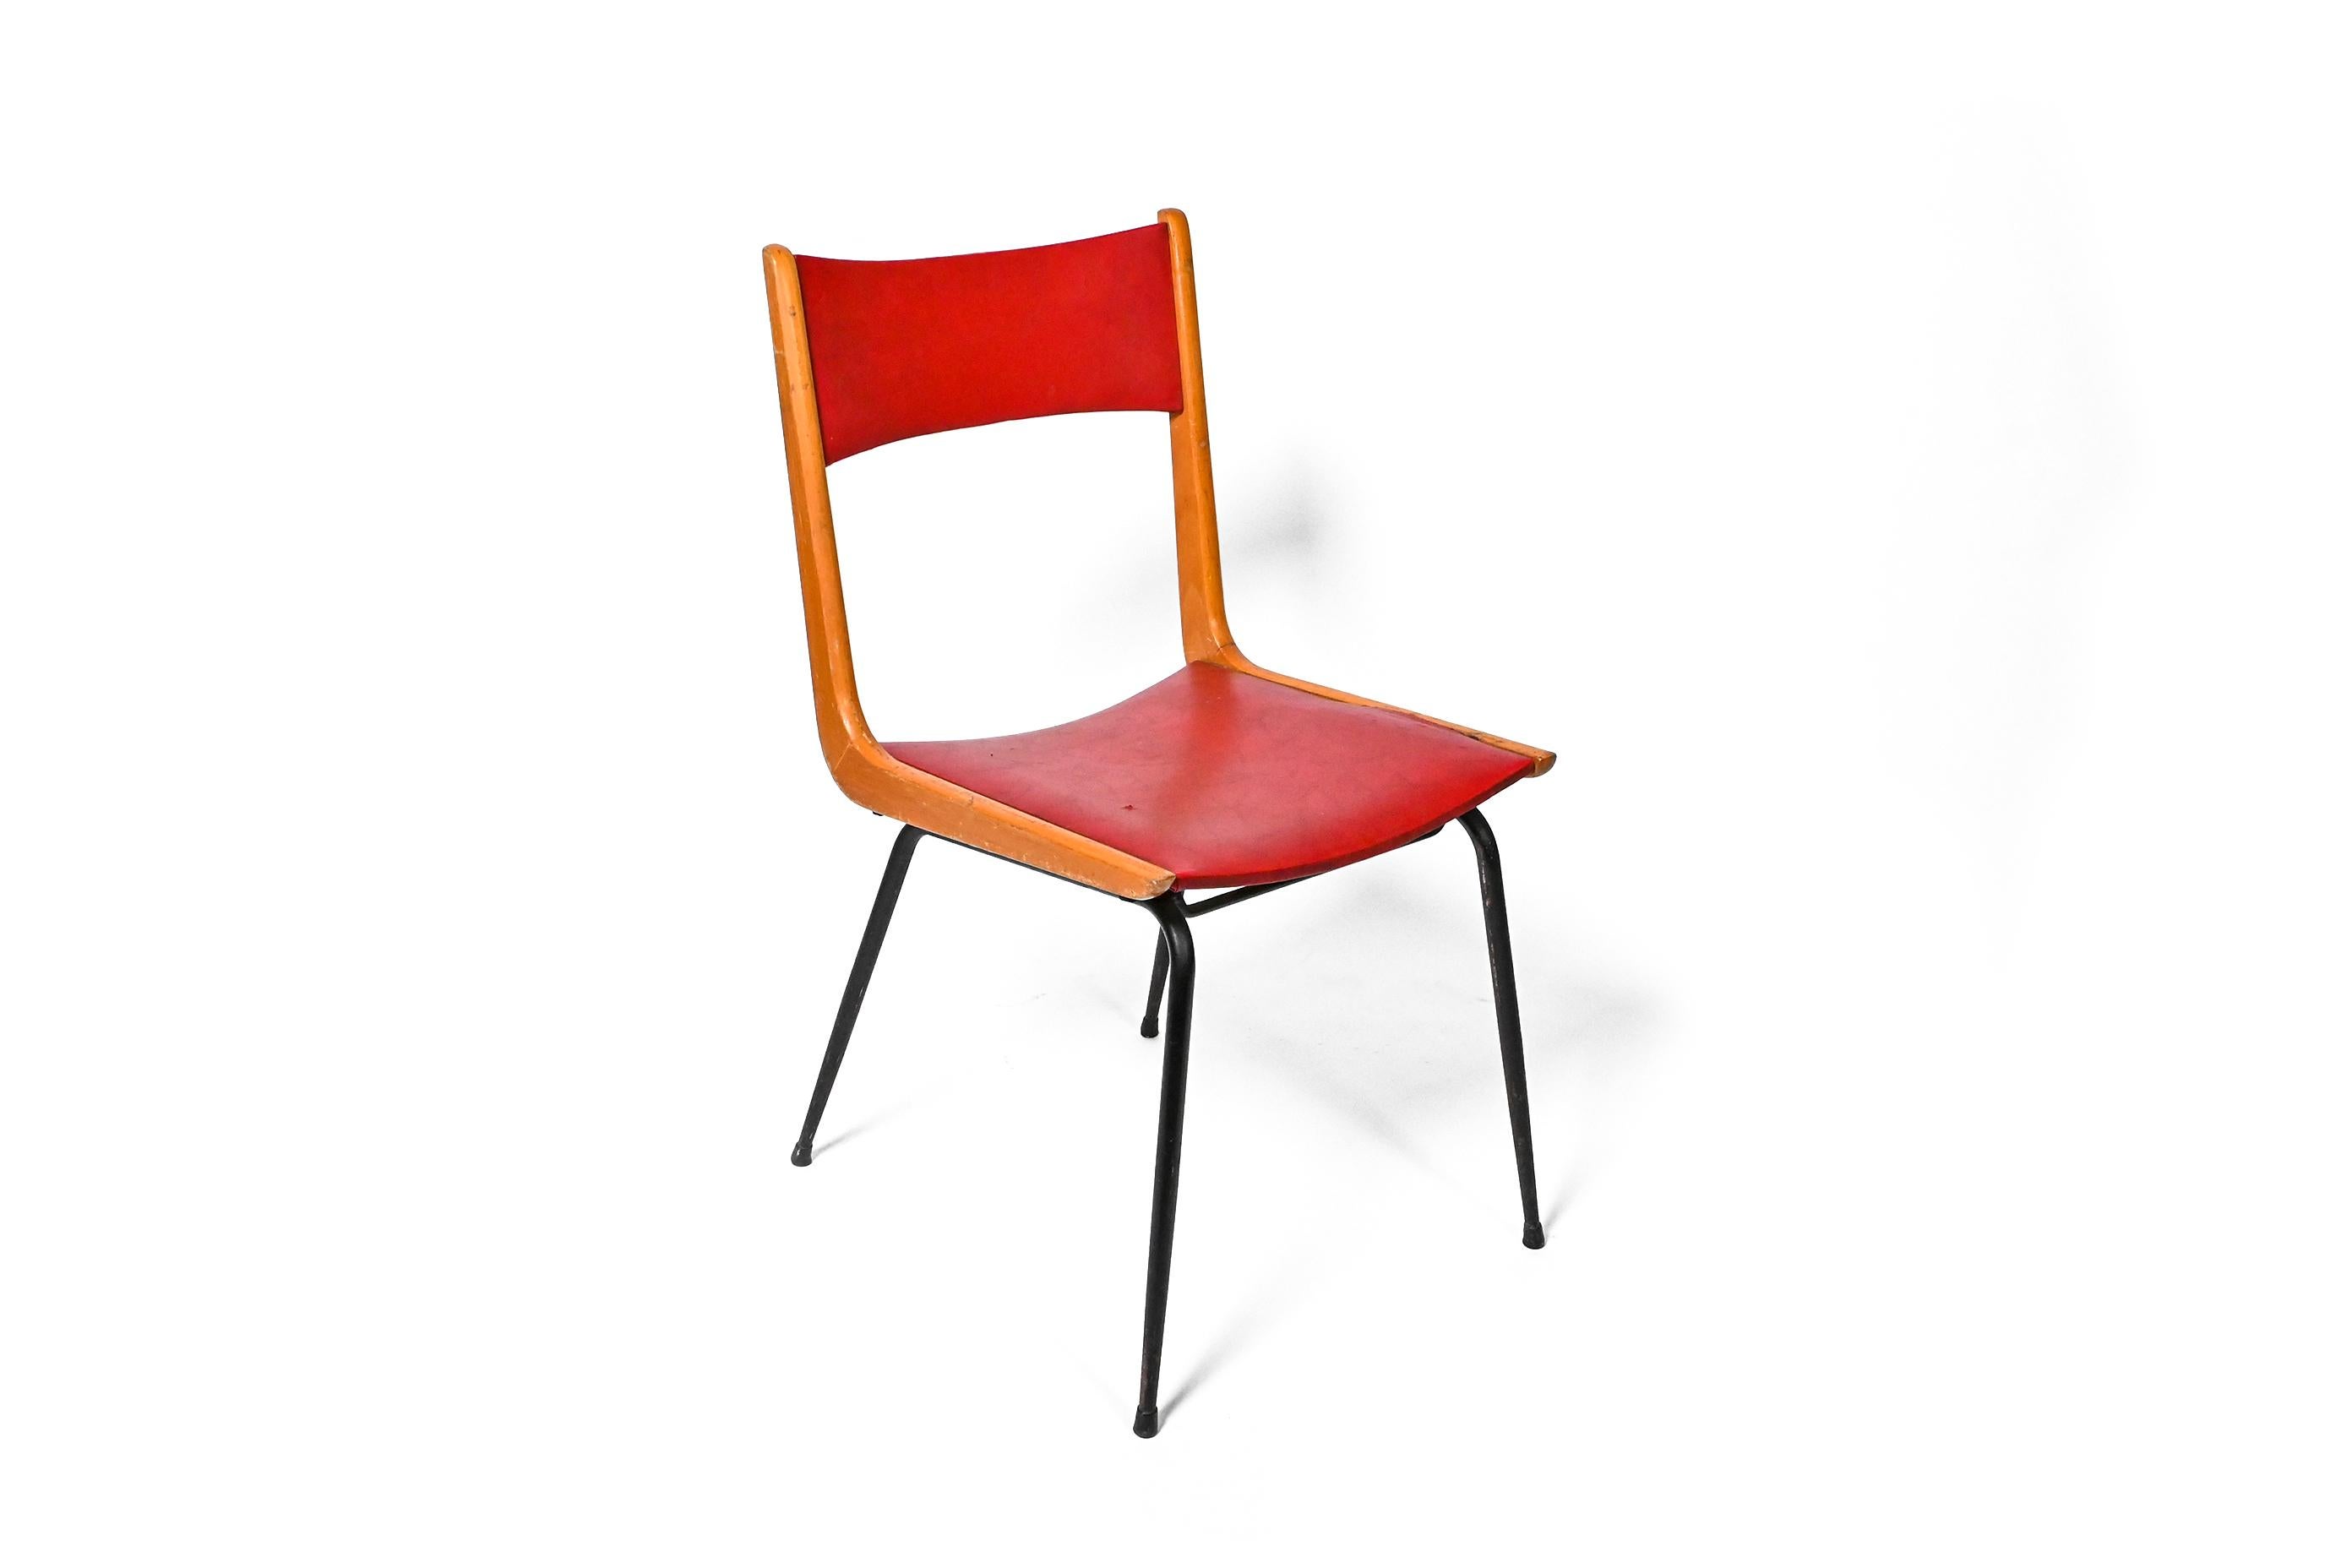 An Italian boomerang chair by the famous Italian architect and designer Carlo De Carli, 1950s.